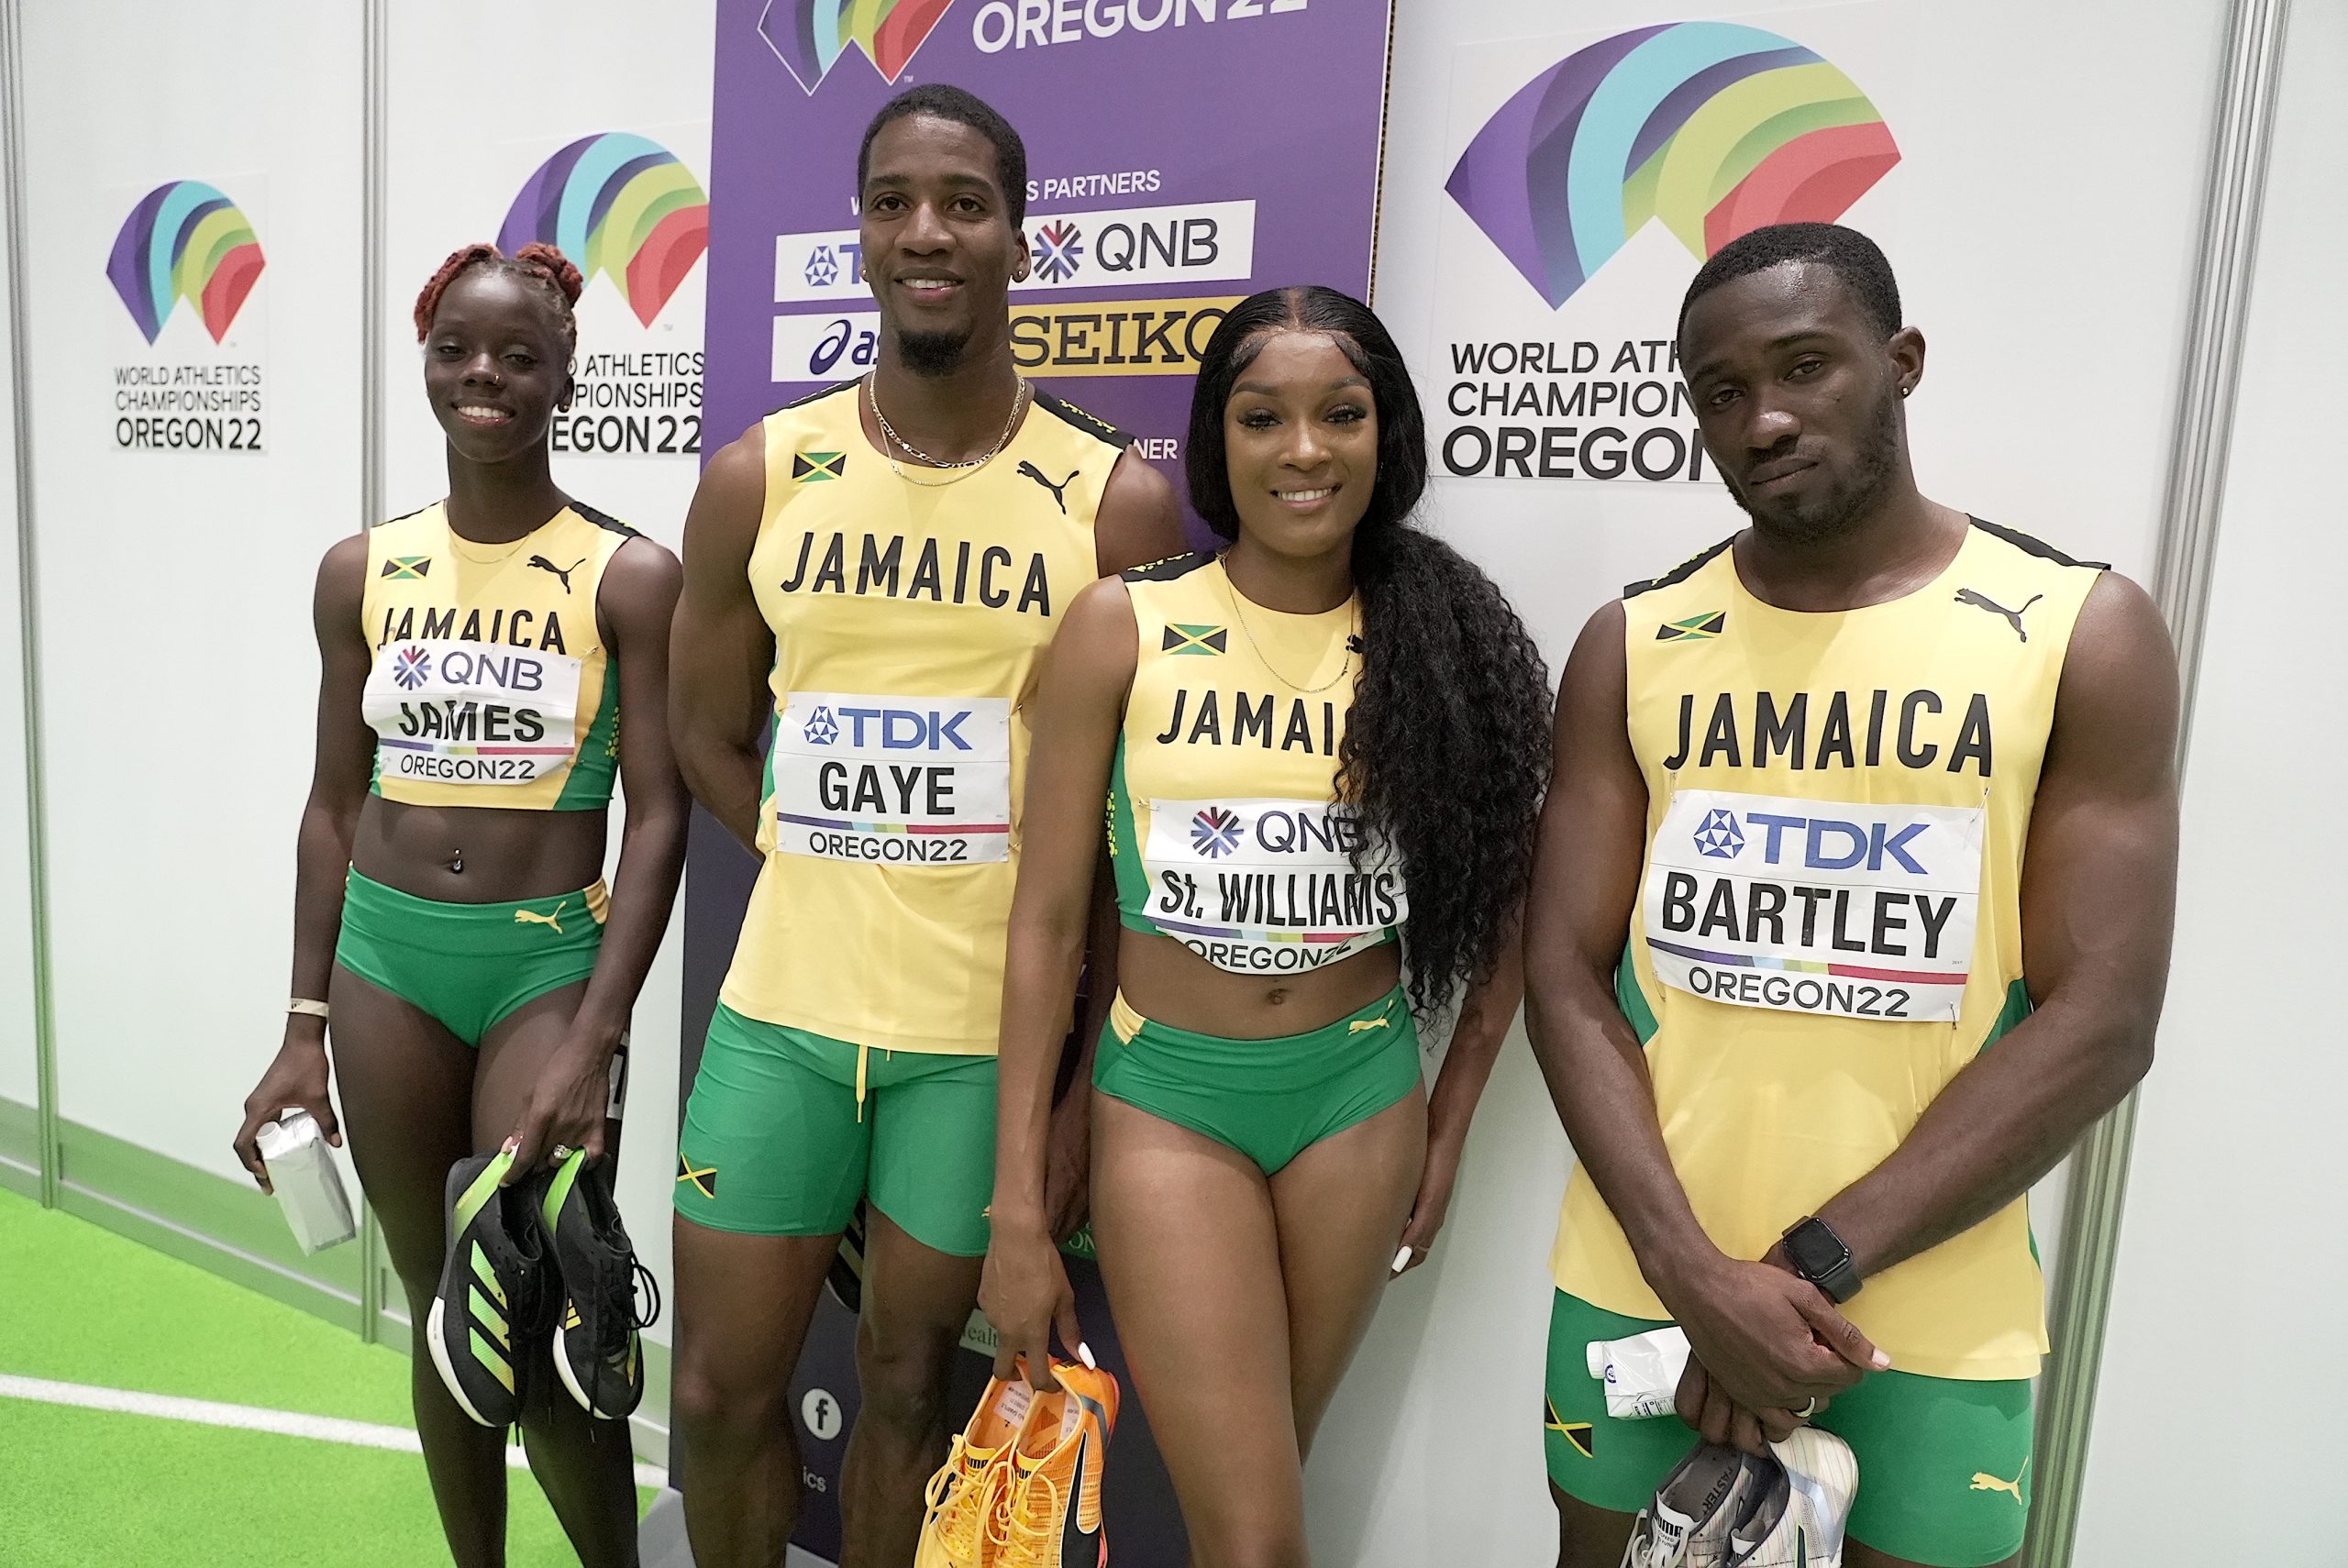 Jamaica mixed relay team 5th Oregon22